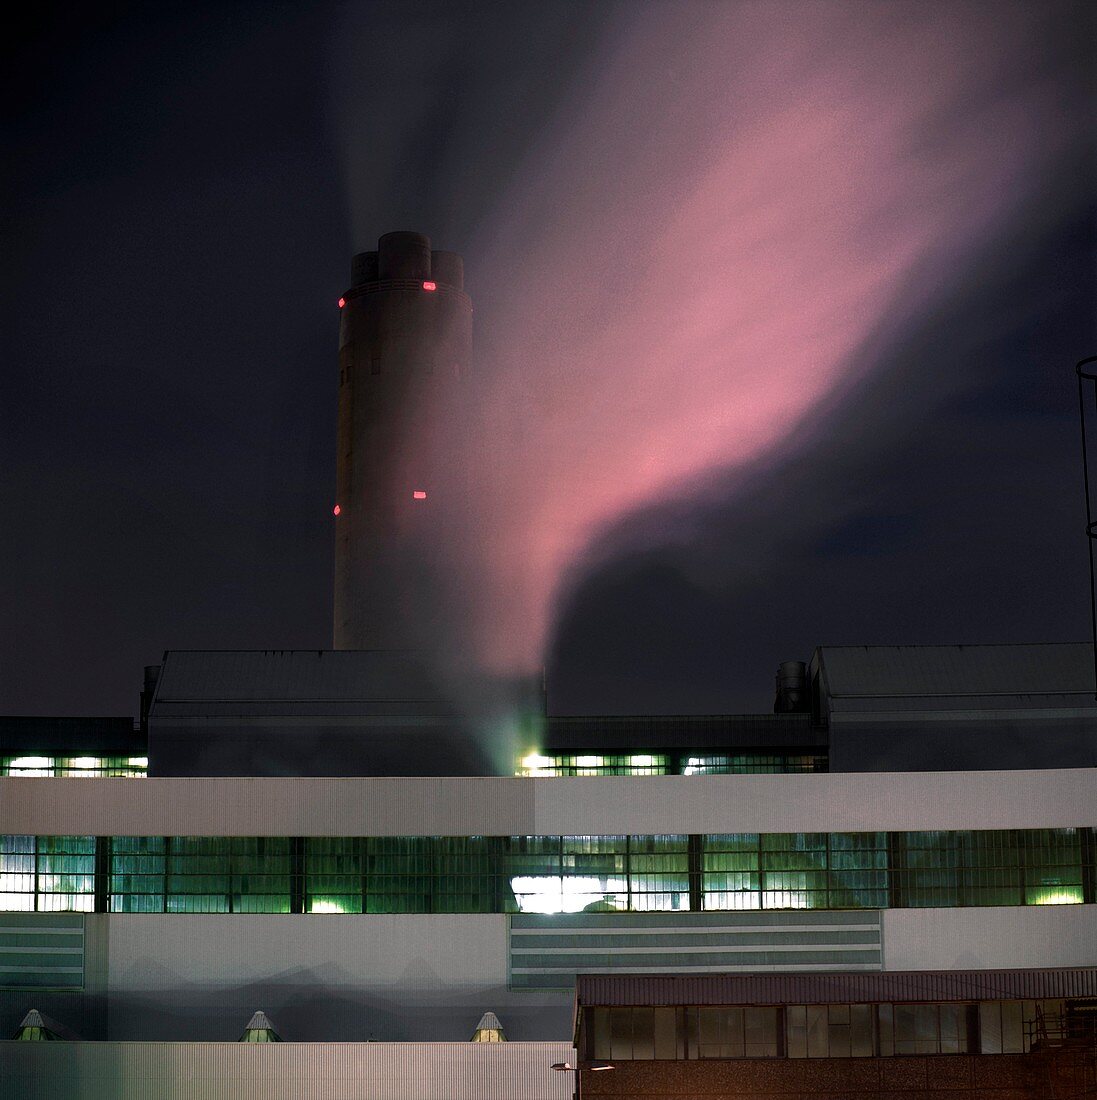 Aberthaw B Power Station at night